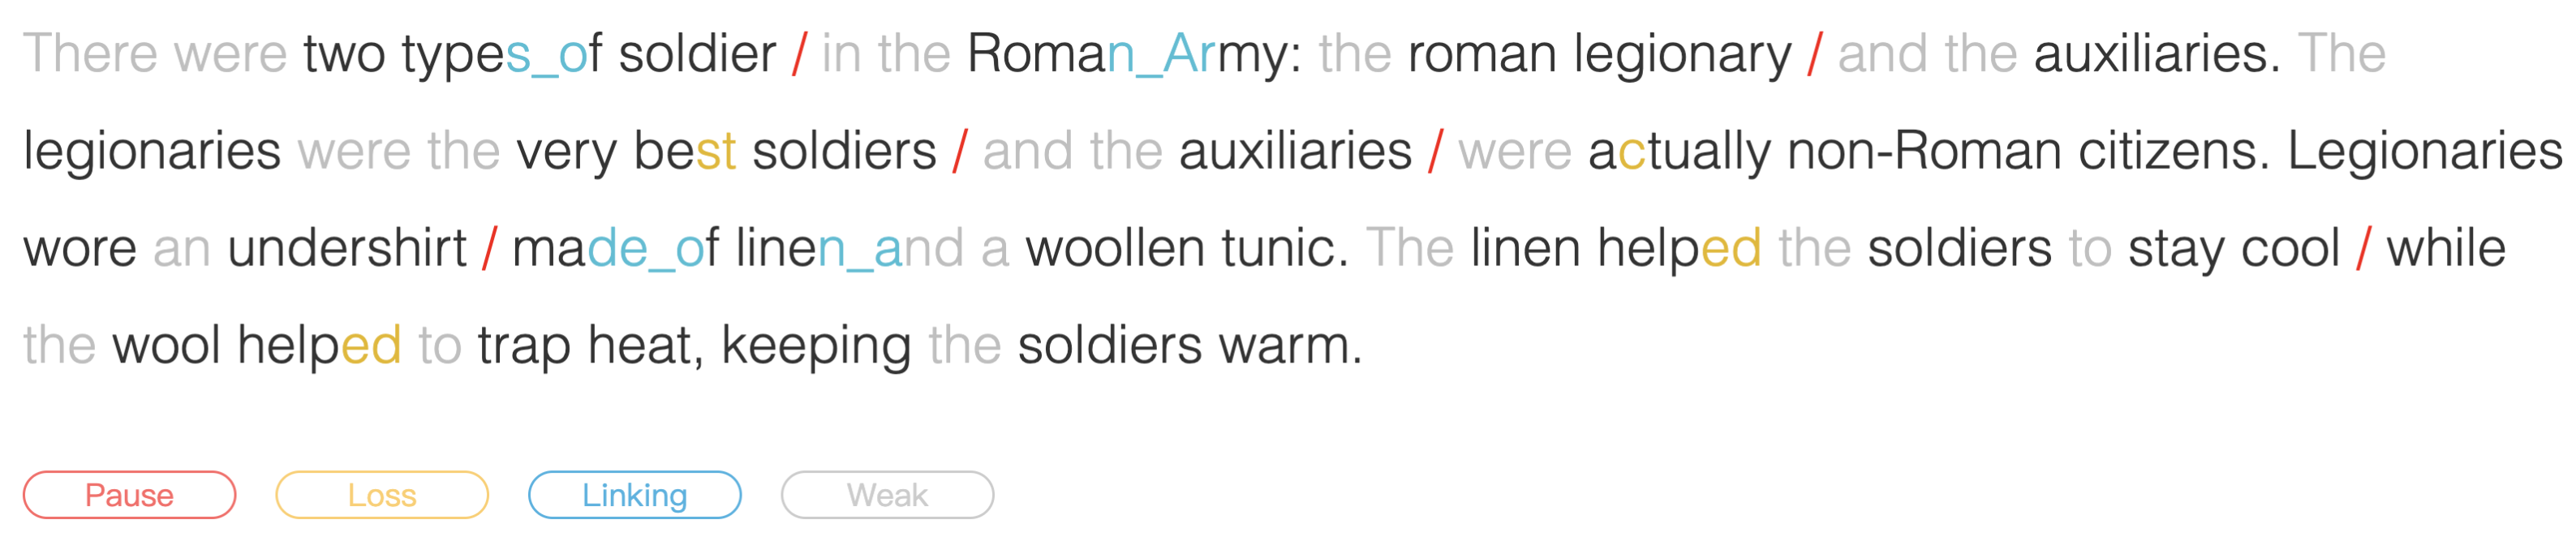 PTE - Read Aloud - Roman Army - Shadowing